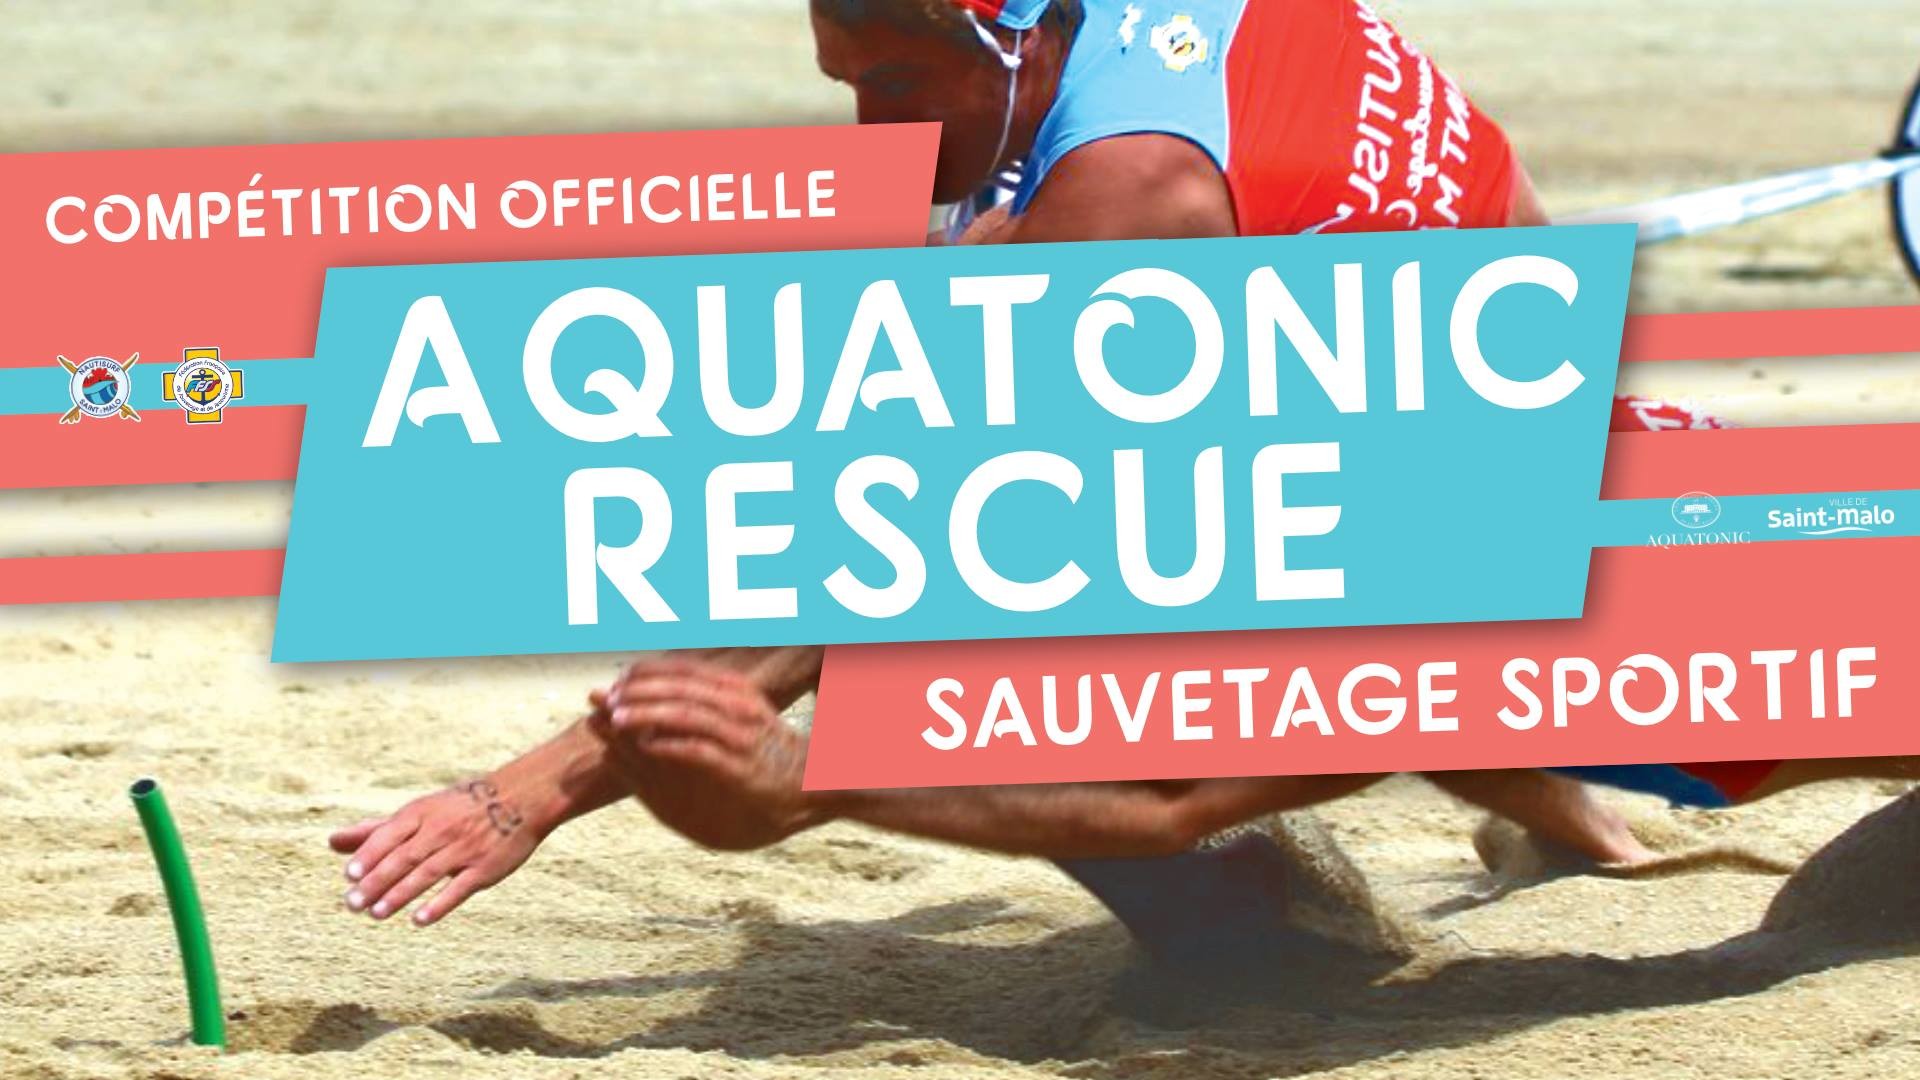 Aquatonic Rescue 2019